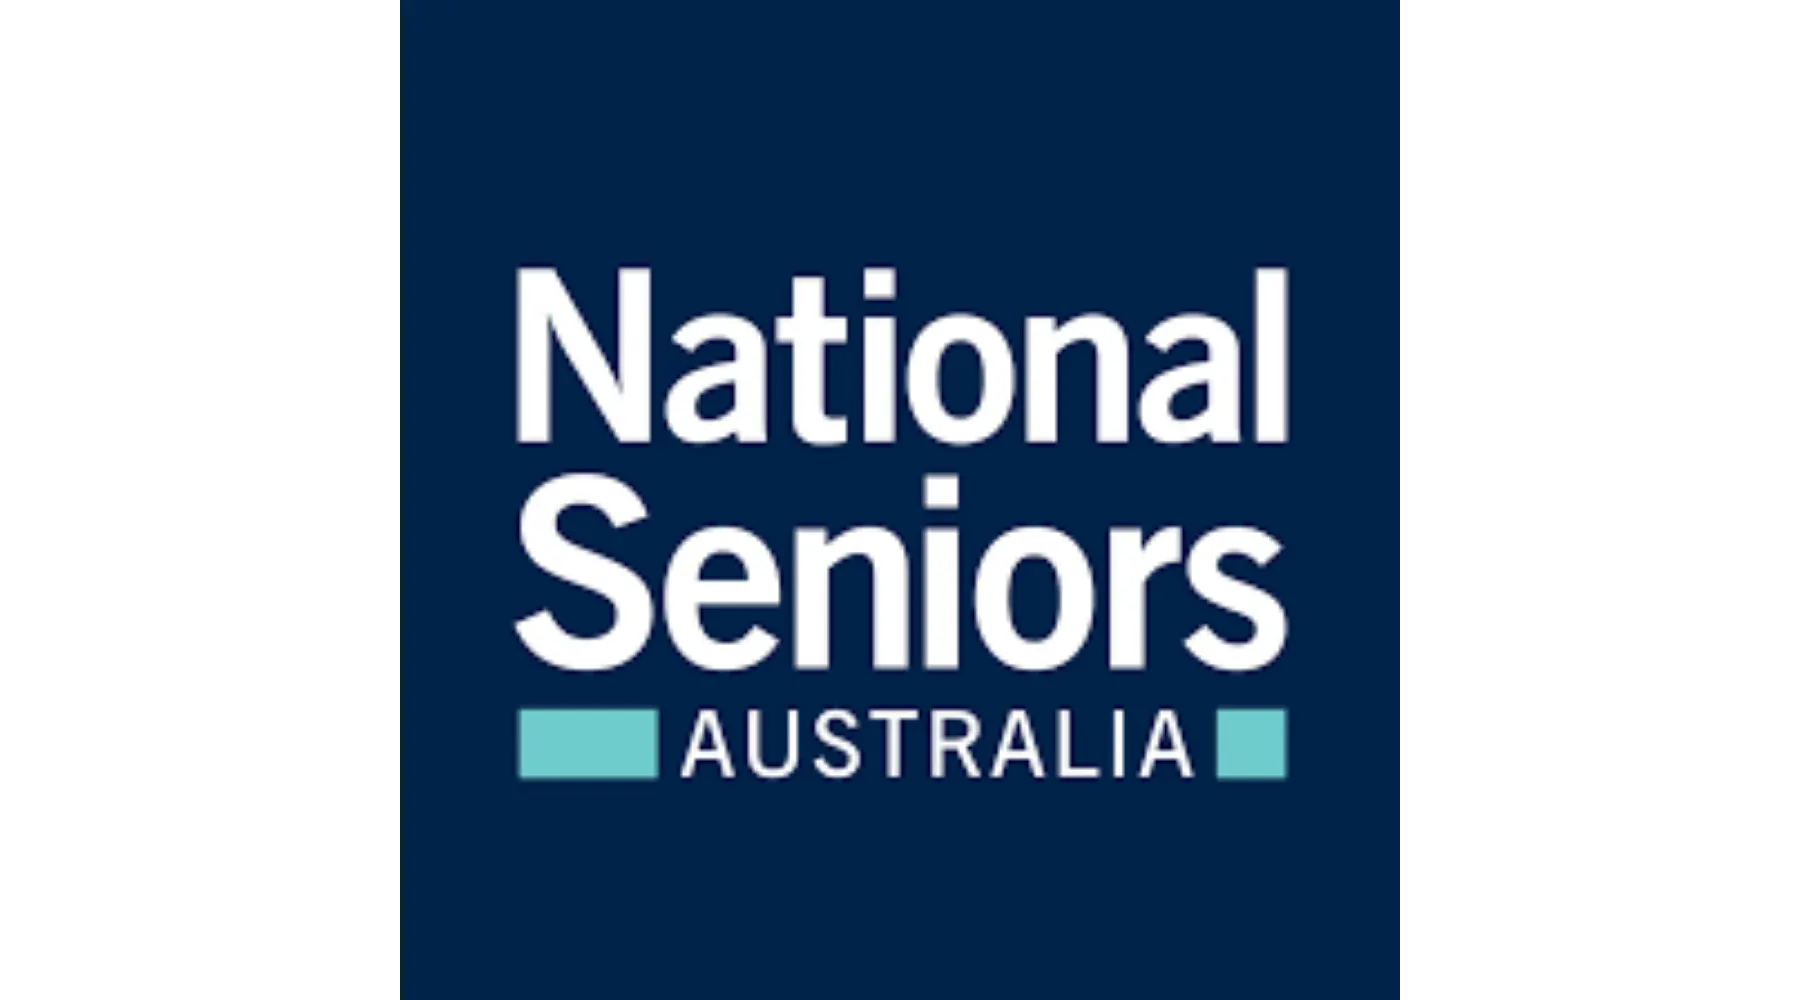 national seniors travel insurance reviews